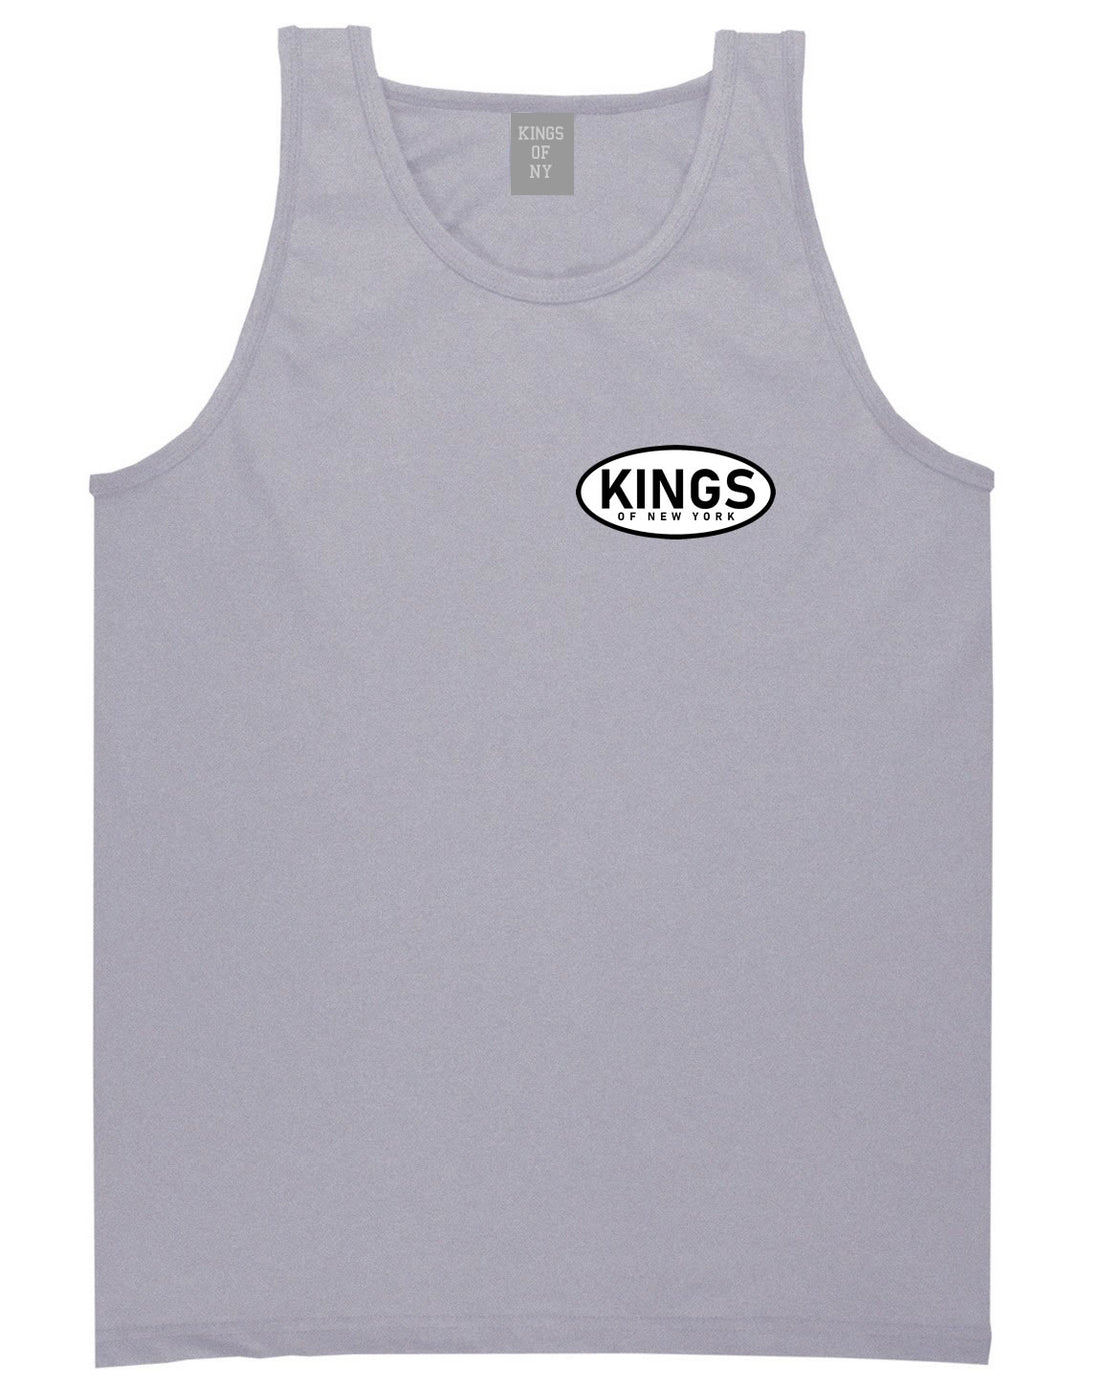 Kings Of New York Work Logo Mens Tank Top Shirt Grey